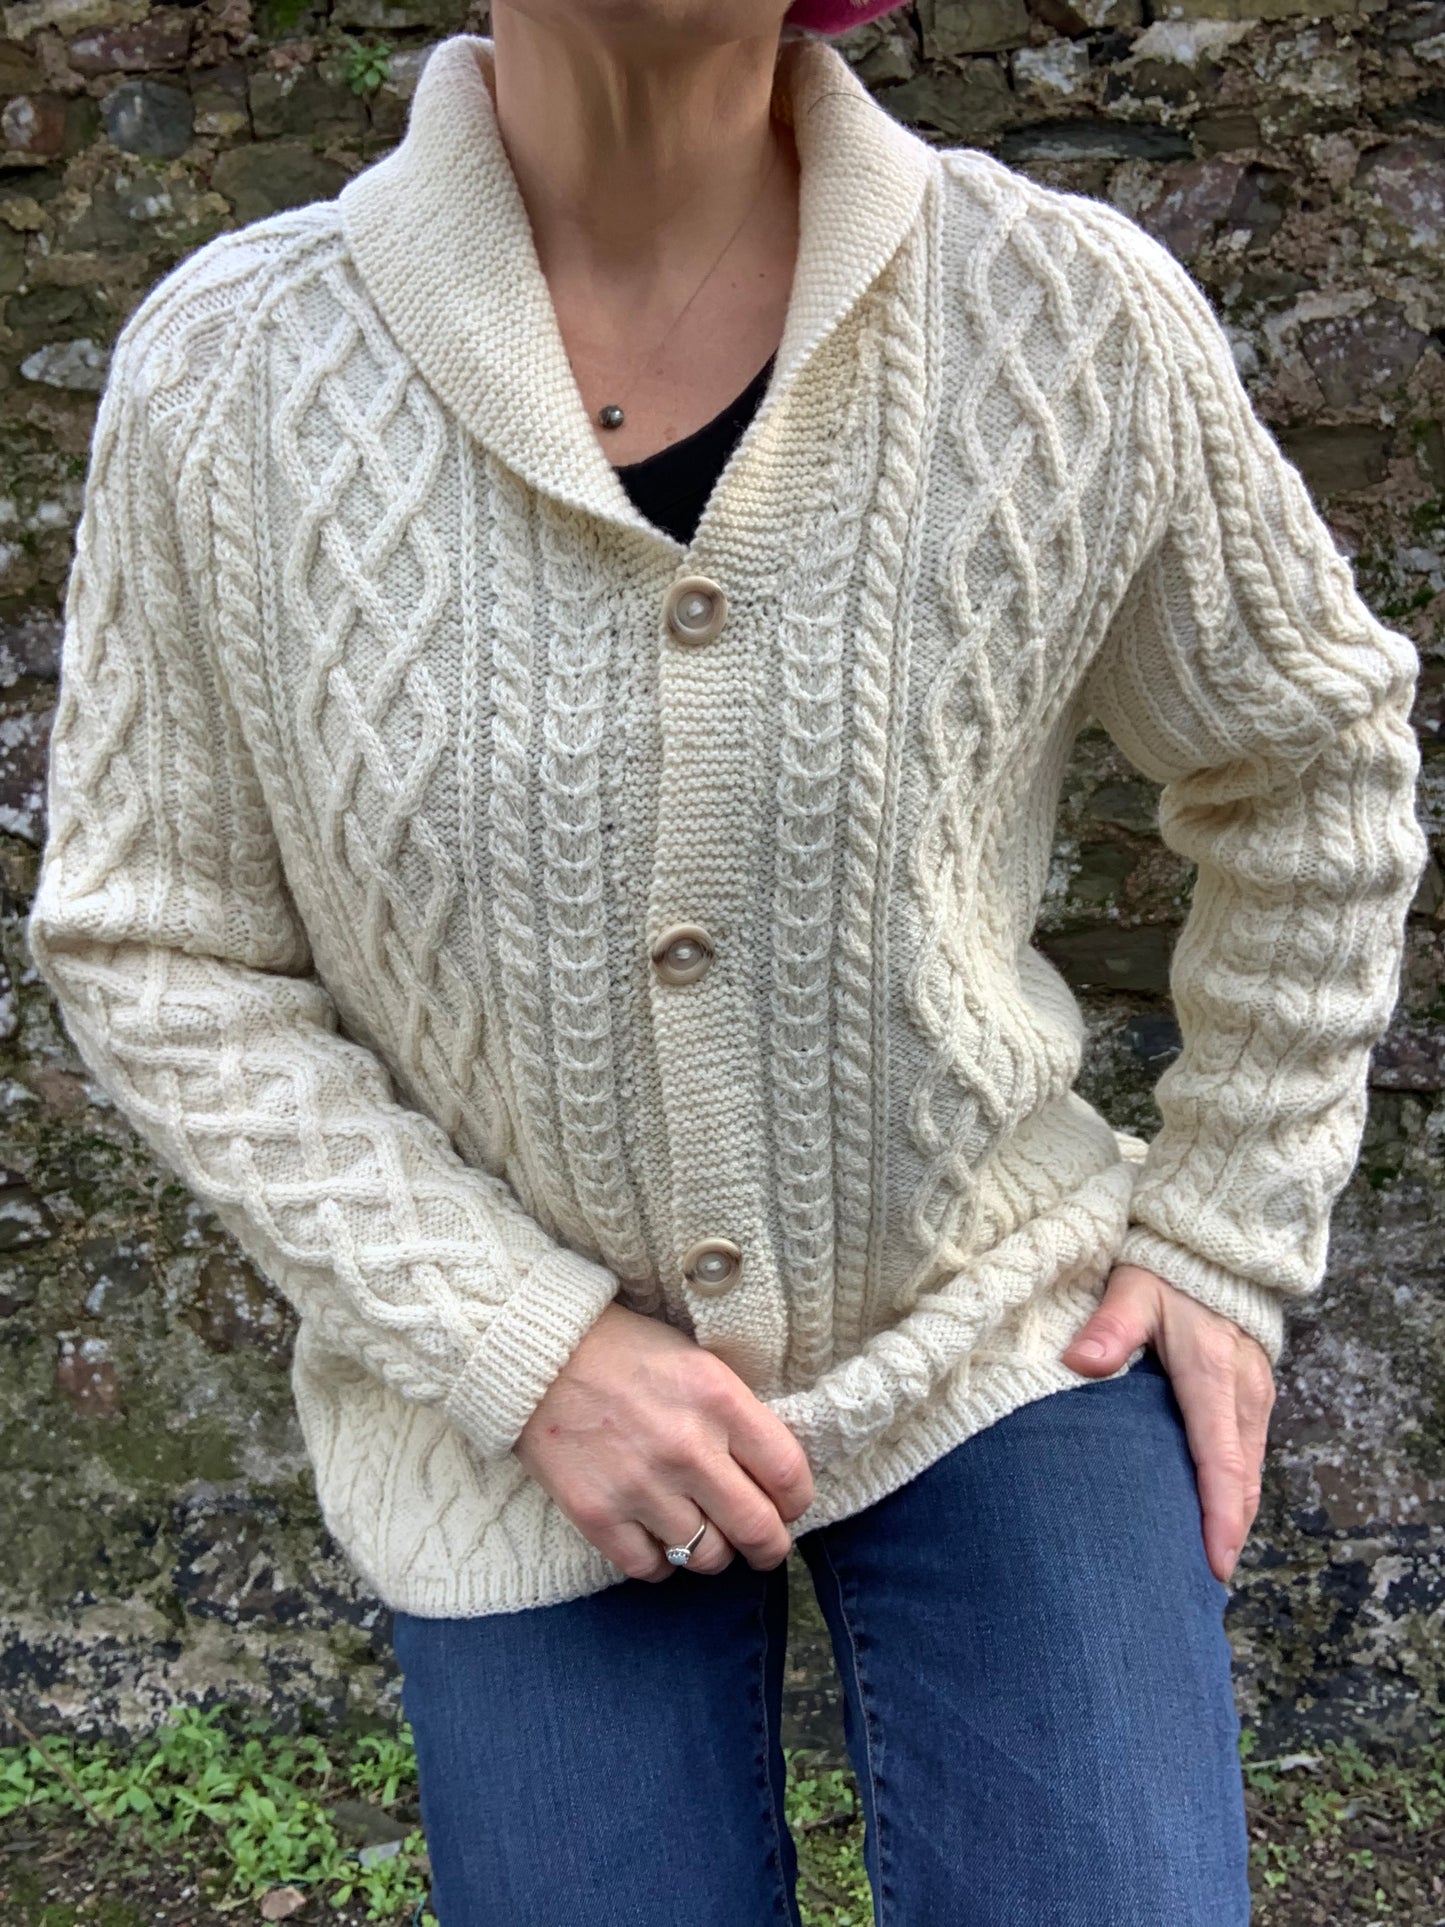 Vintage Aran wool hand knitted cardigan